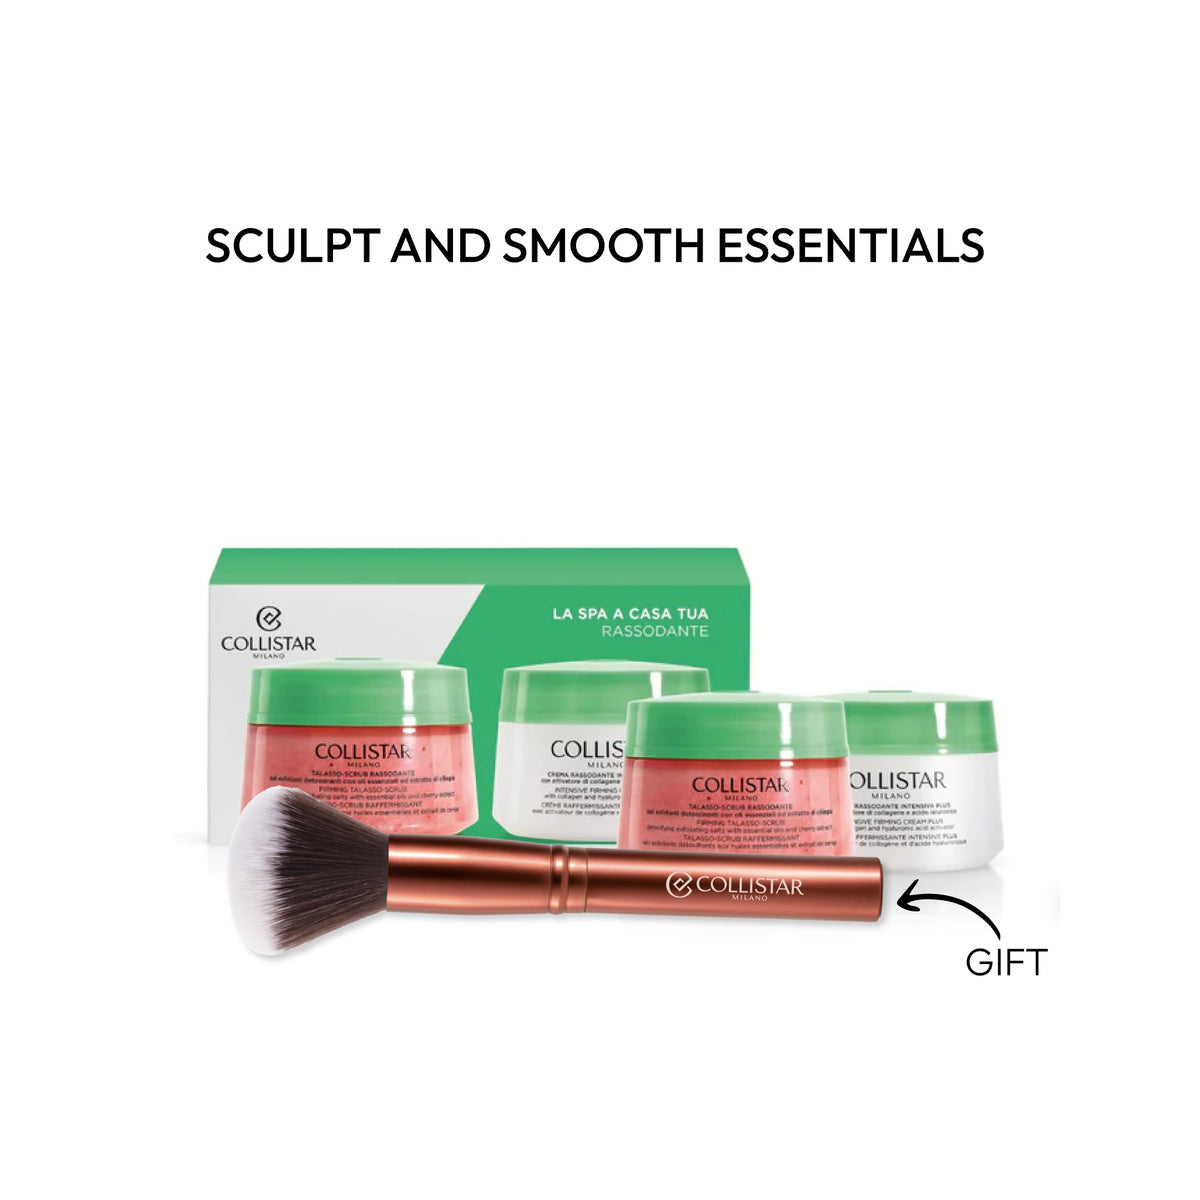 Sculpt & Smooth Essentials